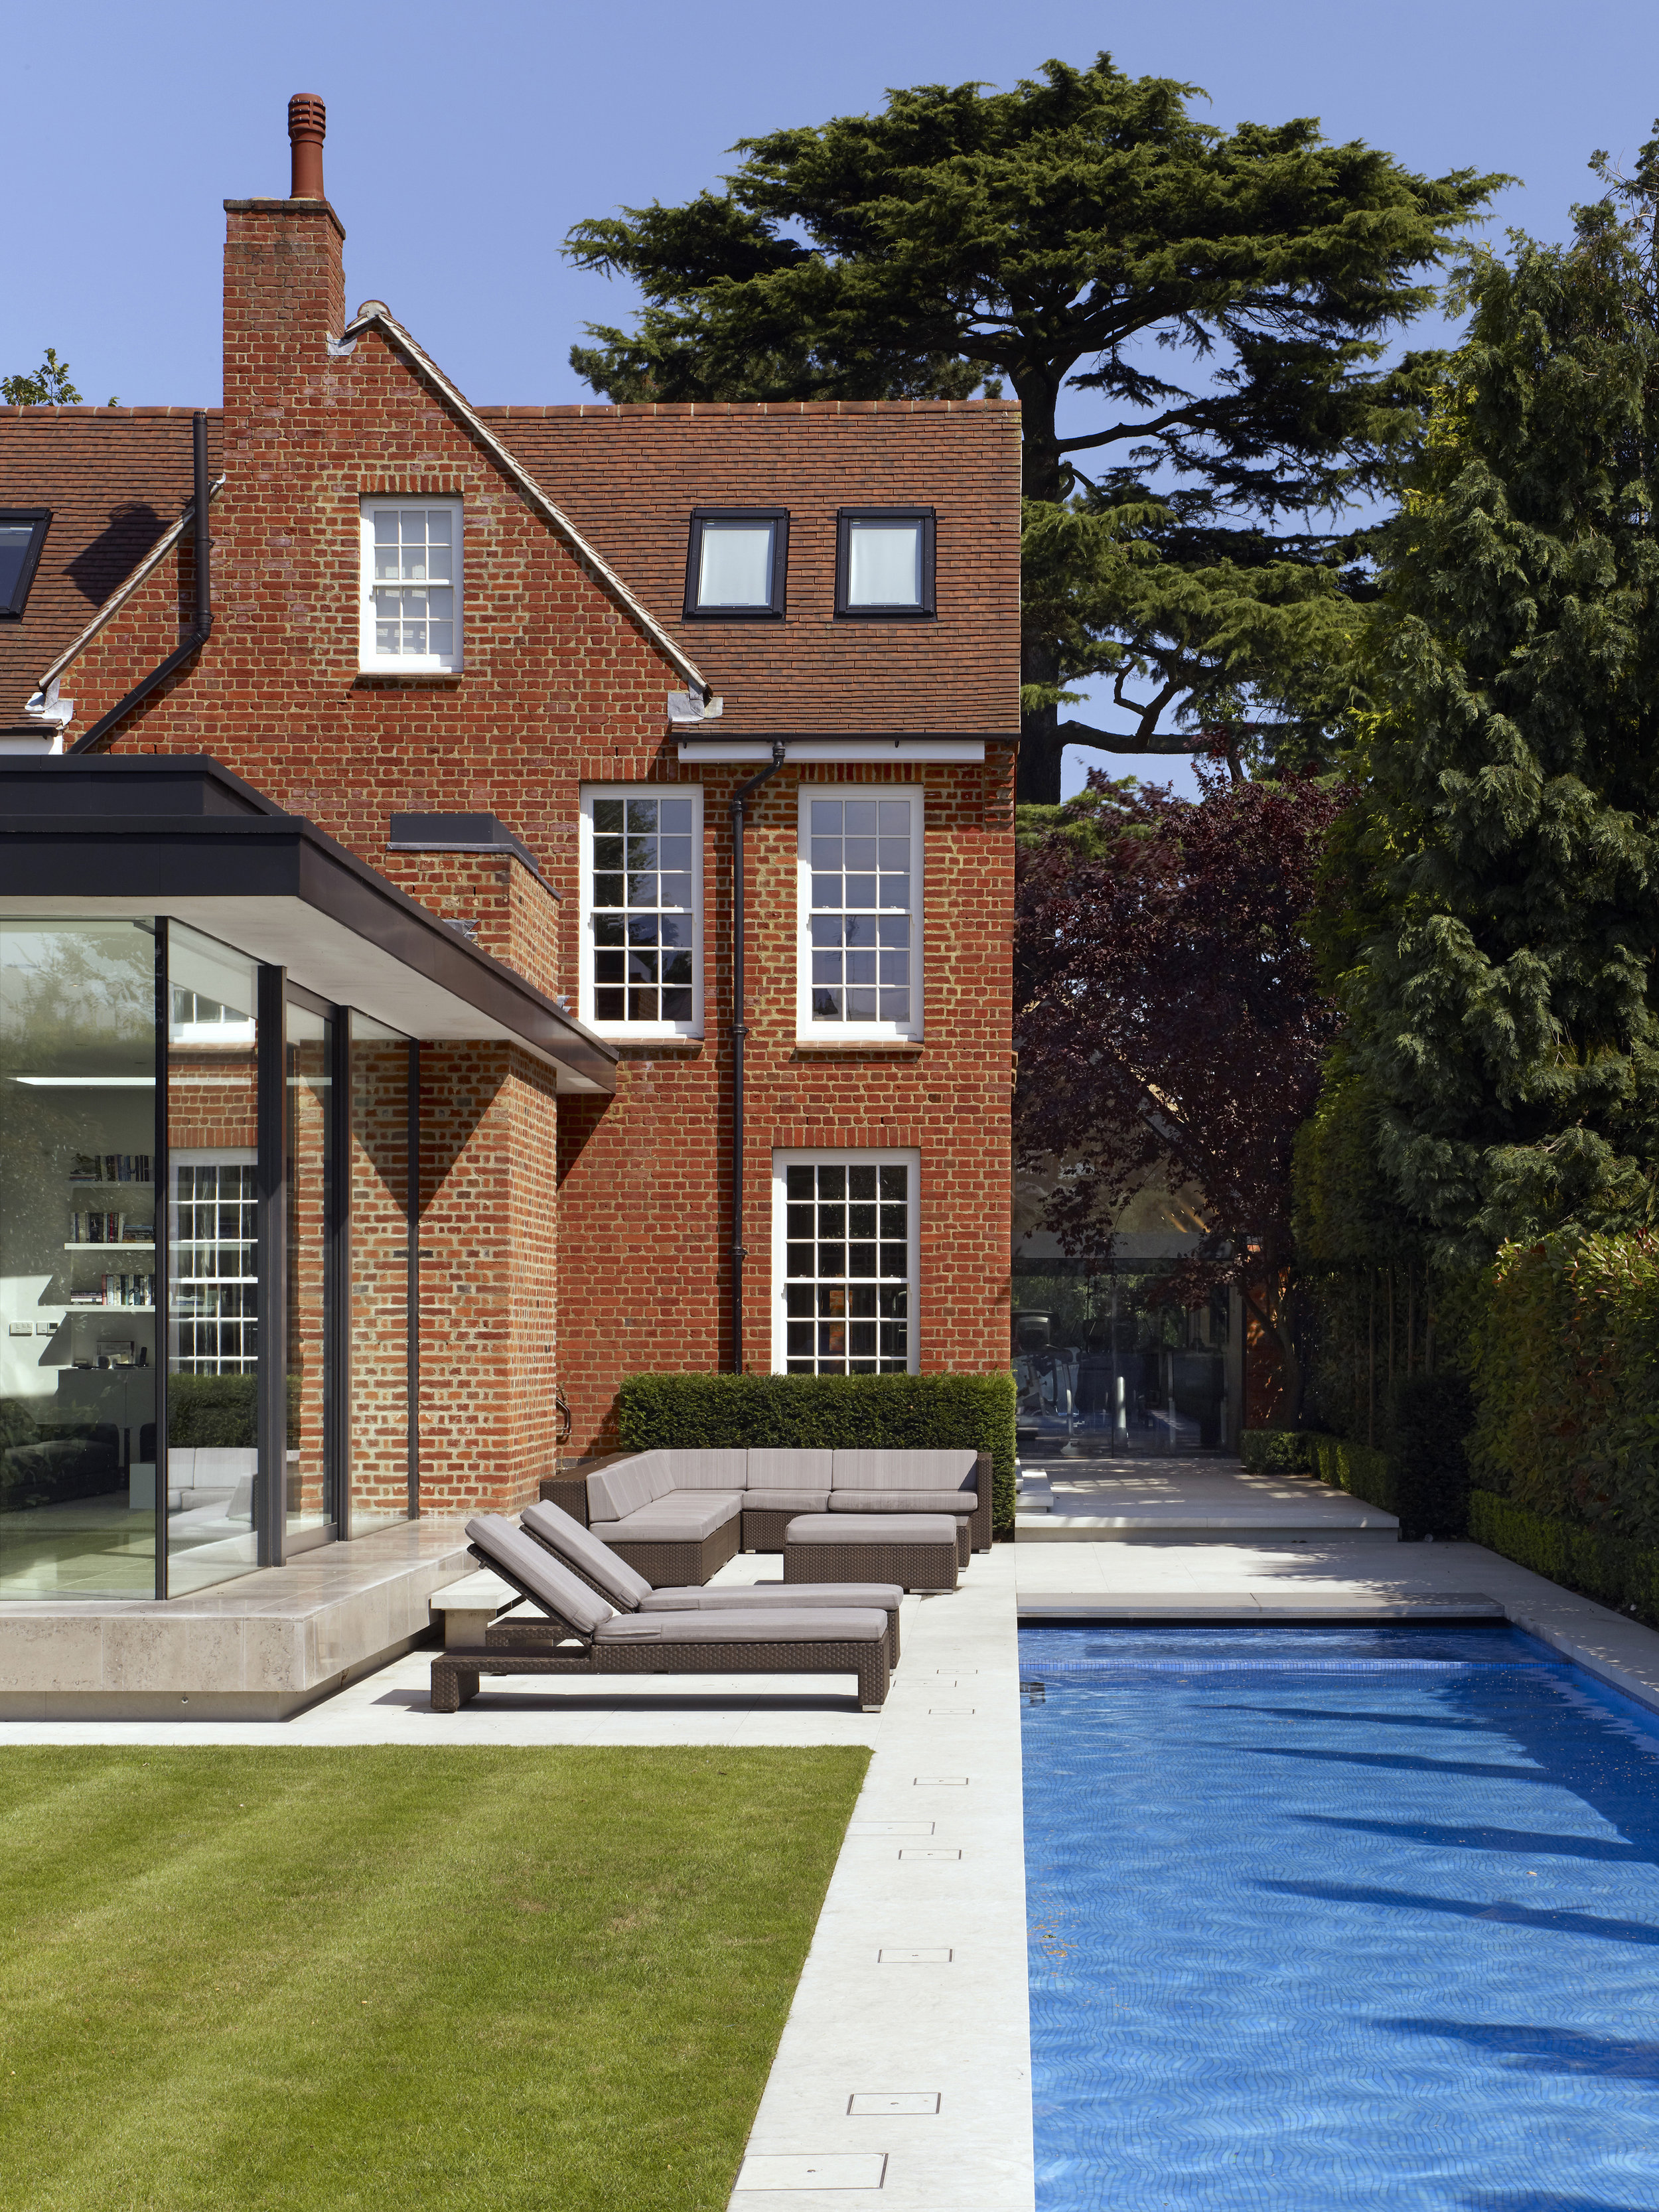 Award Winning Luxury House Renovation London, including swimming pool jacuzzi car lift and gym, by minimalist London architect practice Thompson + Baroni